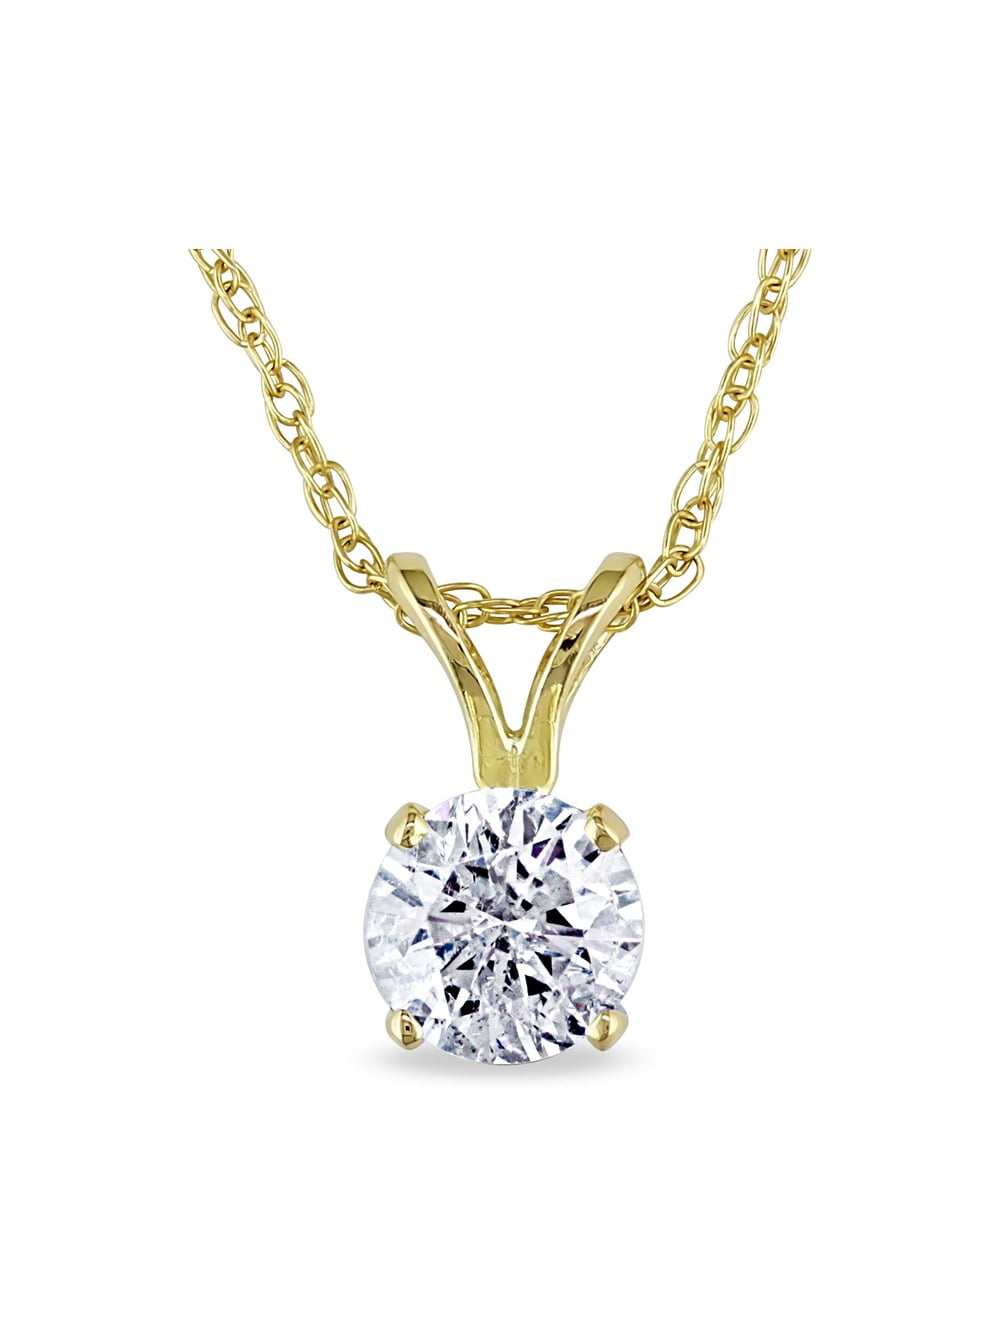 1 2 carat diamond solitaire necklace